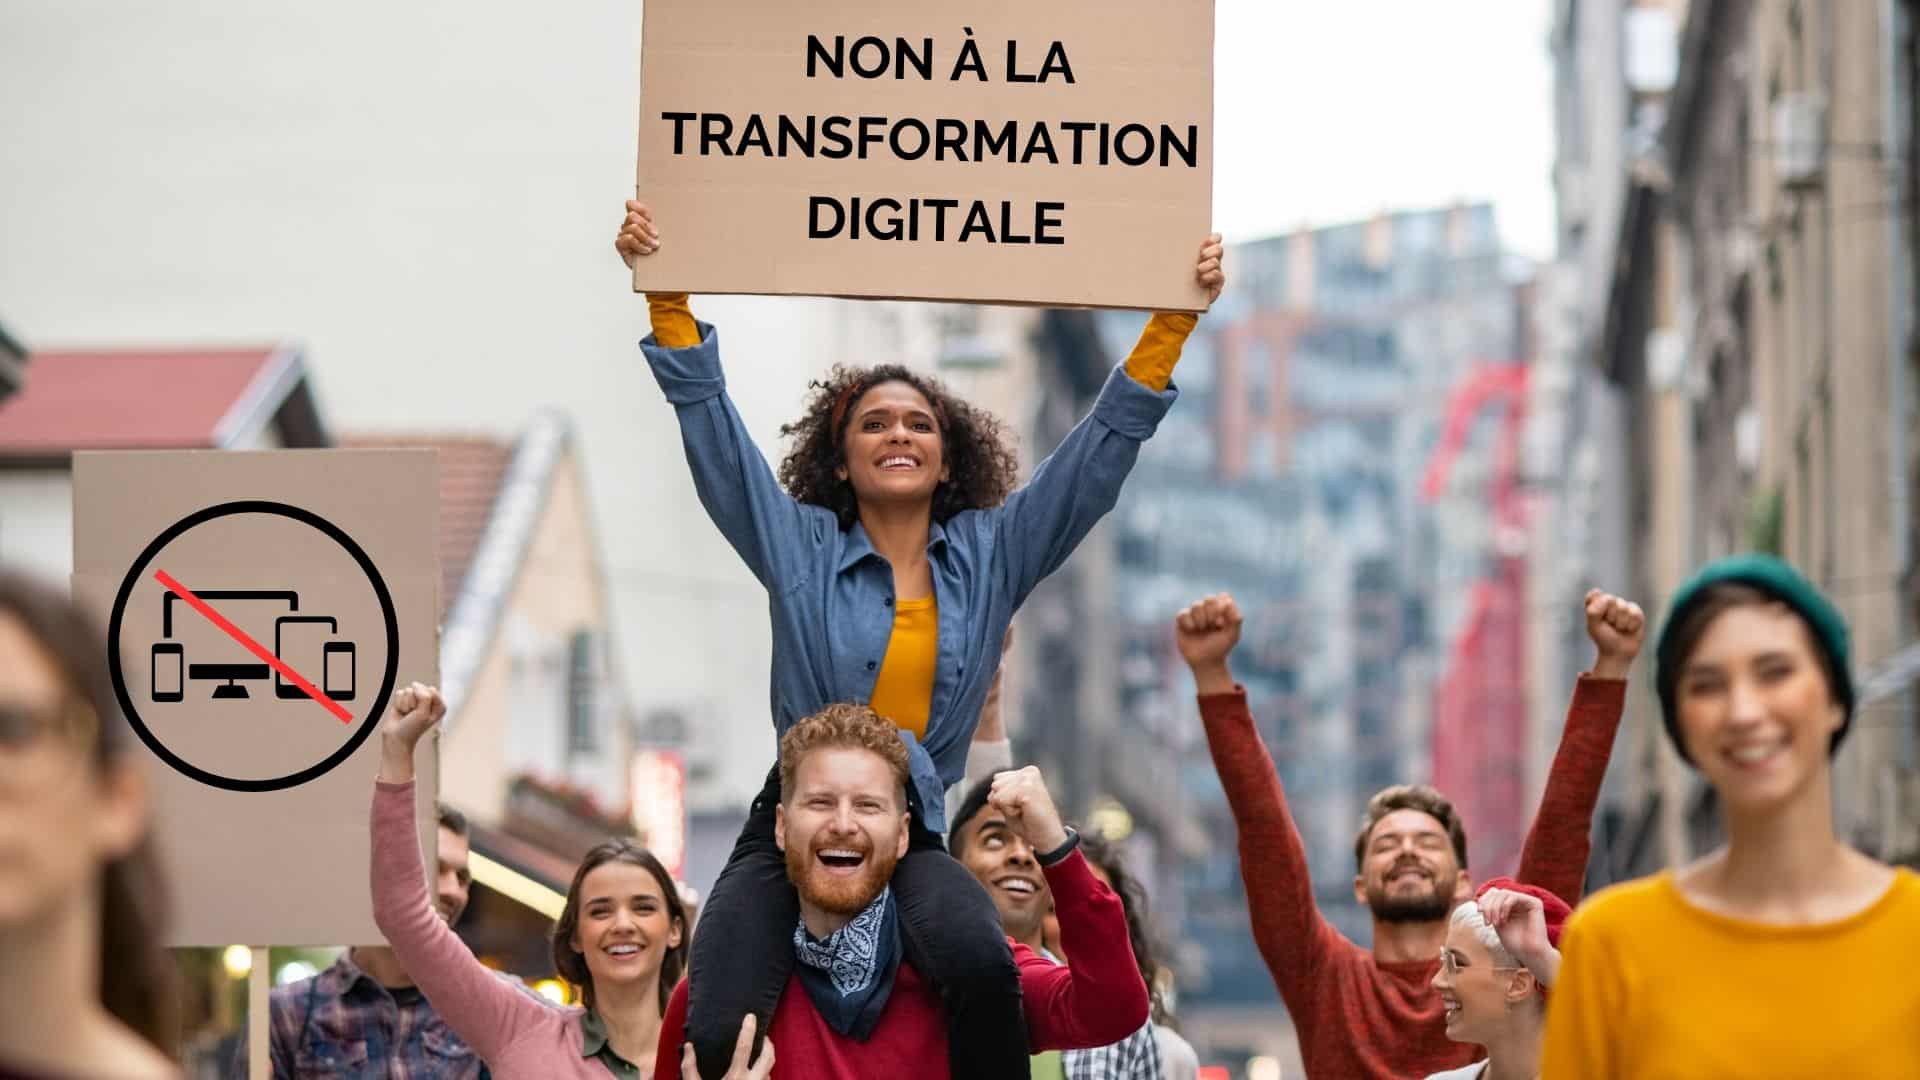 Tranformation digitale refus manifestation